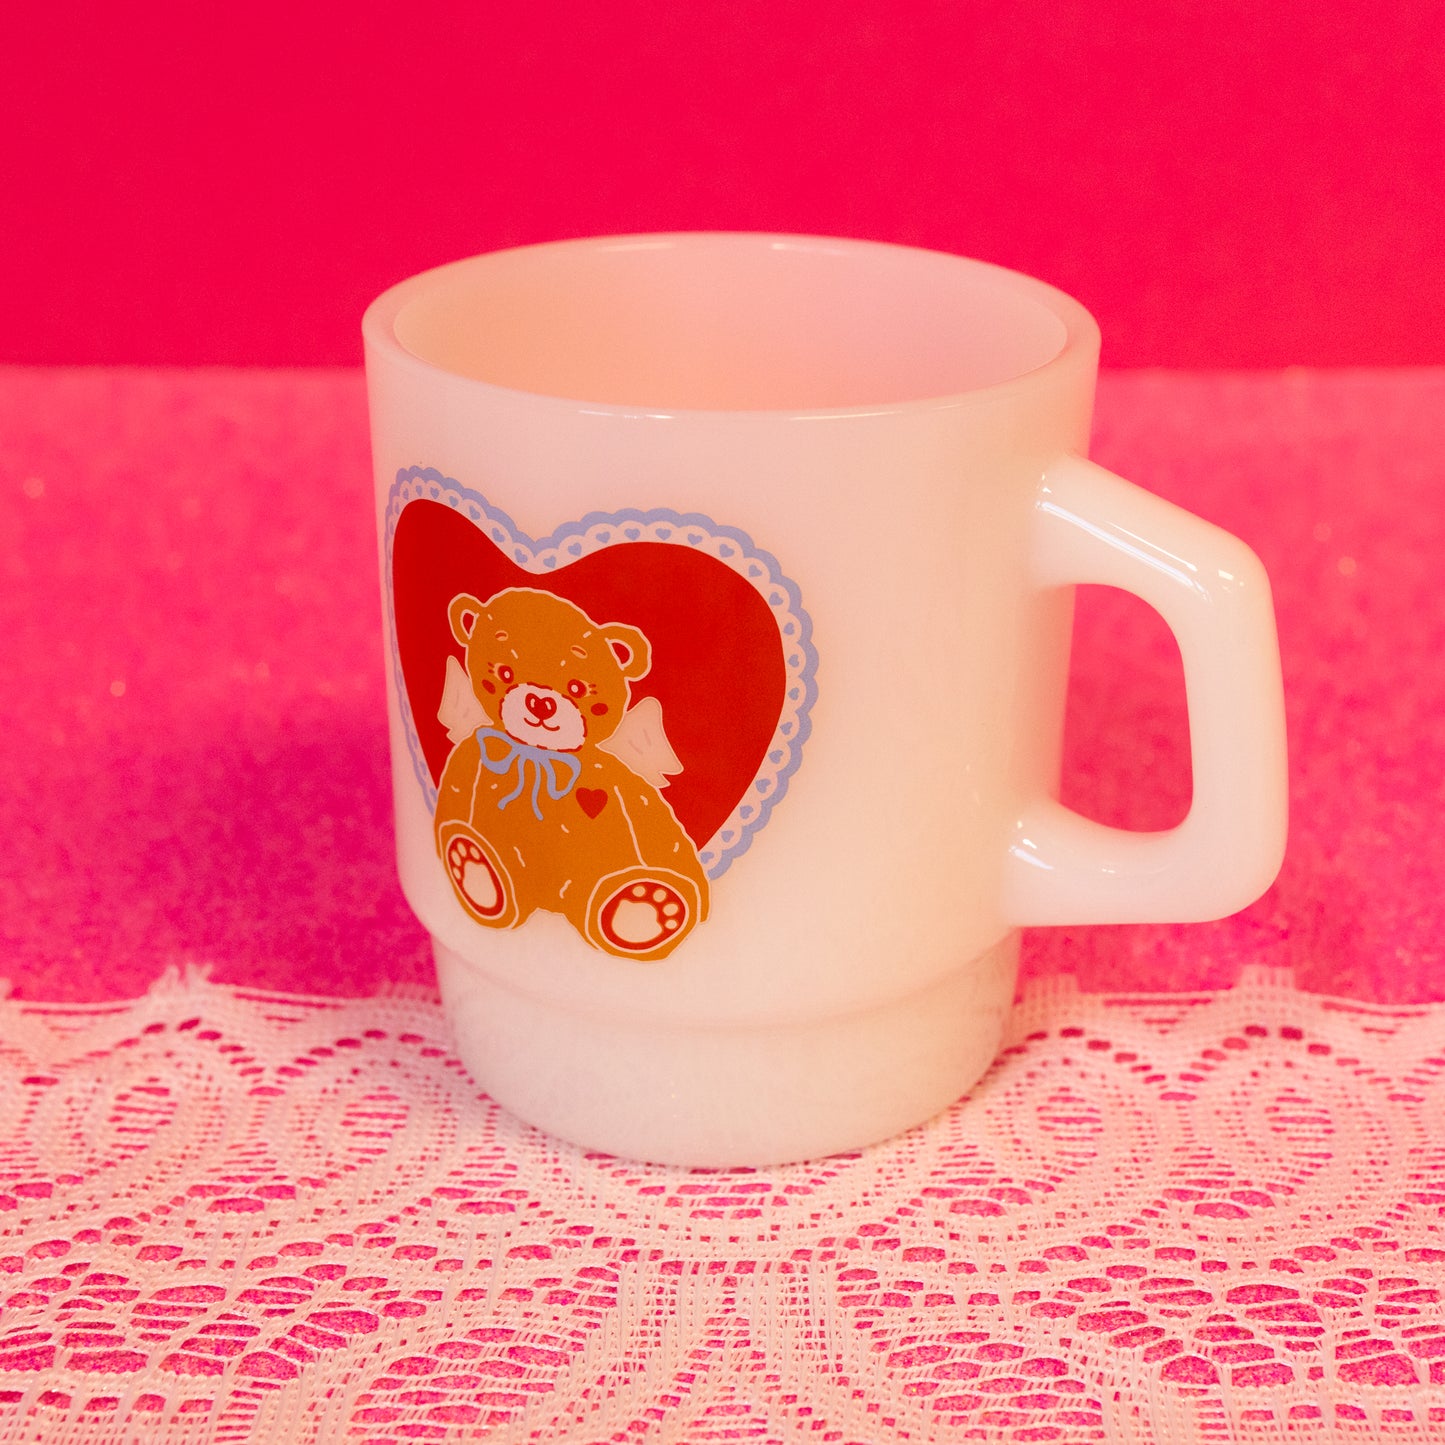 white mug with teddy bear and hearts